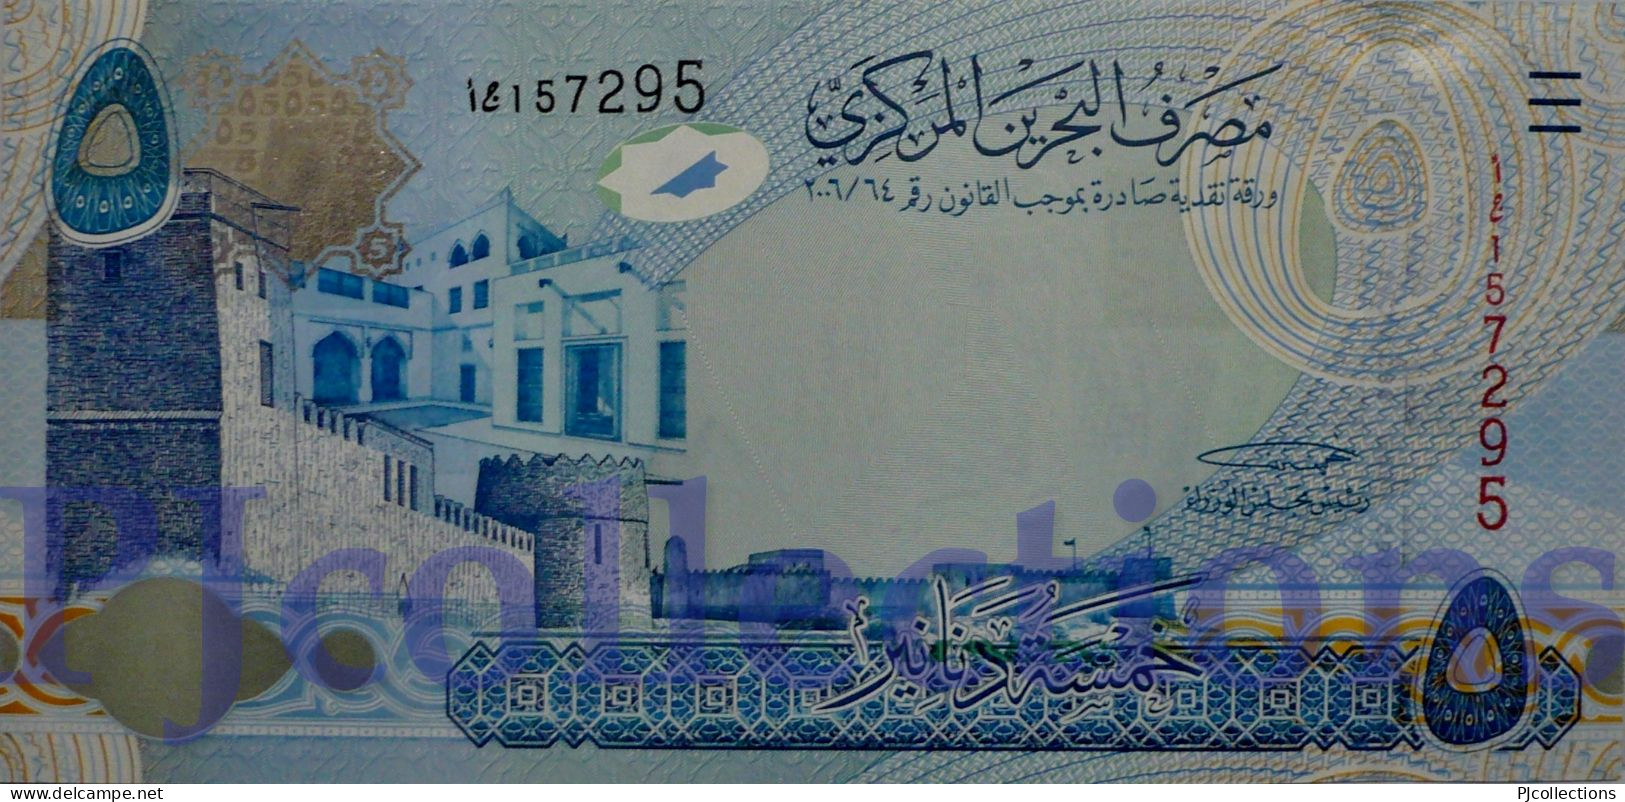 BAHRAIN 5 DINARS 2006 PICK 27 UNC - Bahrein